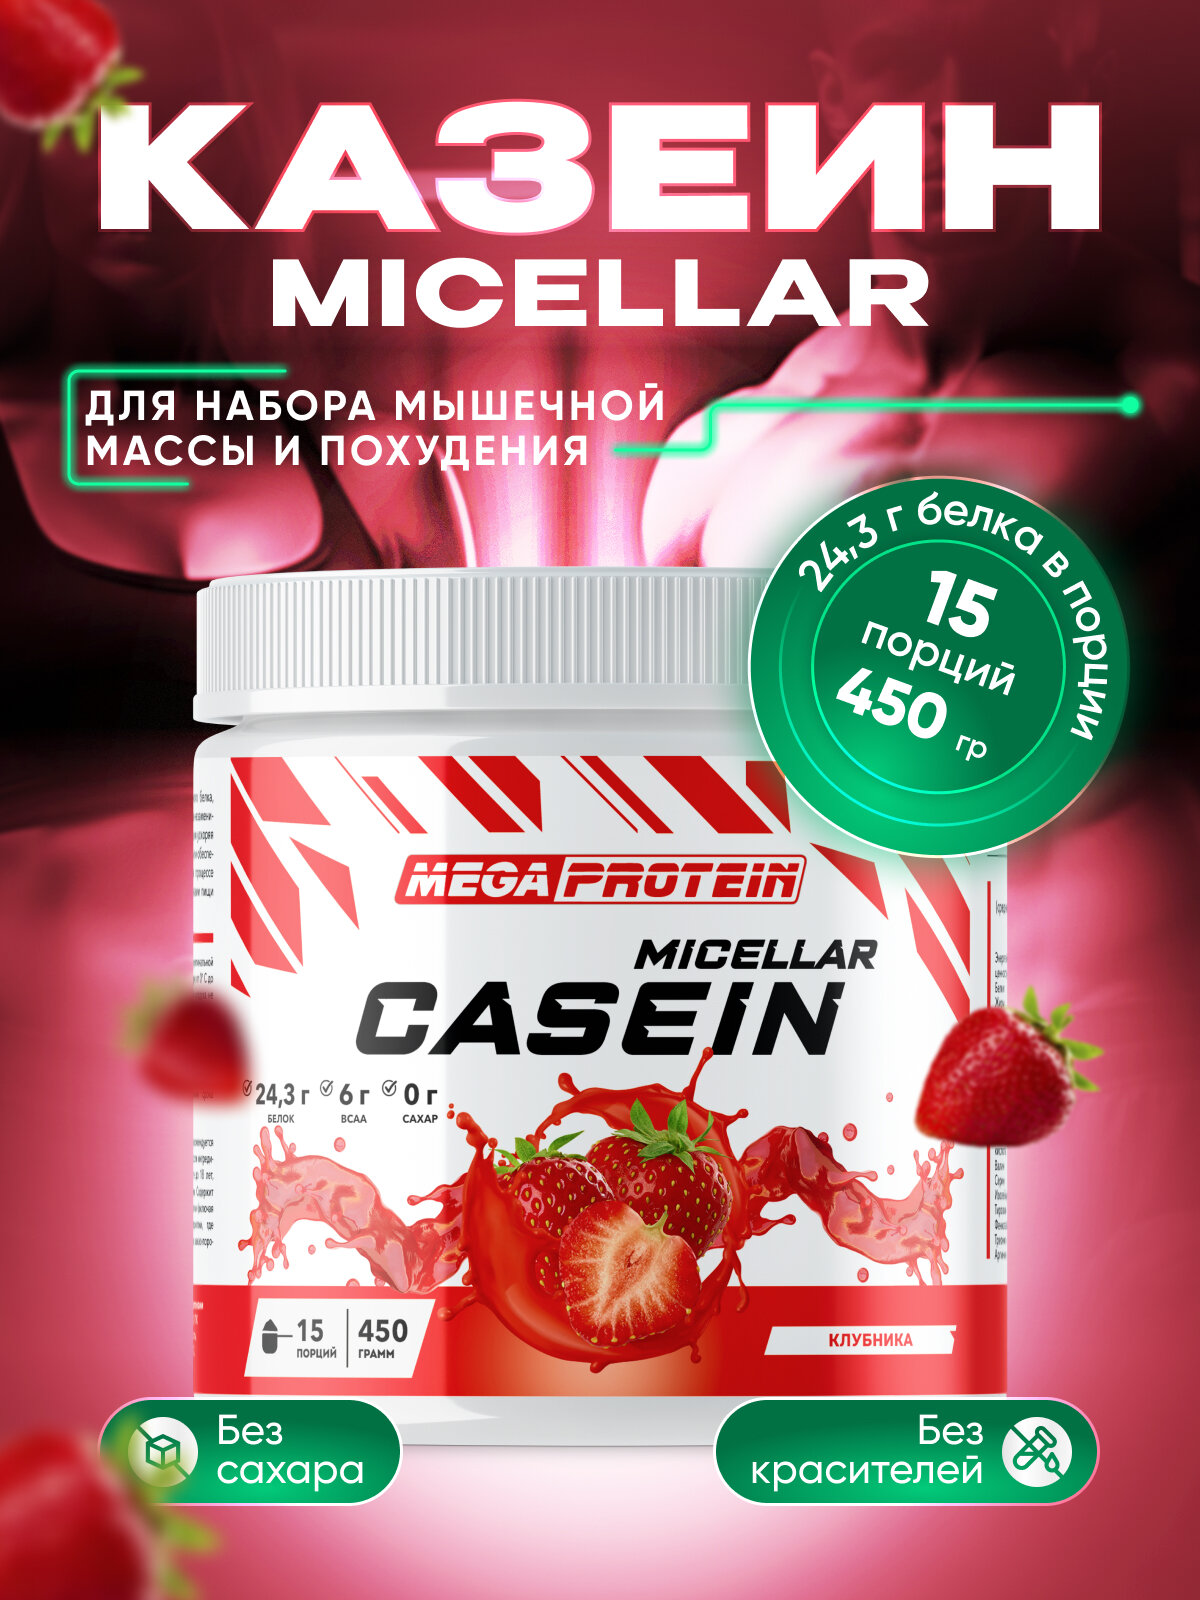 Казеин мицеллярный / Казеиновый протеин "Casein micellar" со вкусом "Клубника" 450 гр